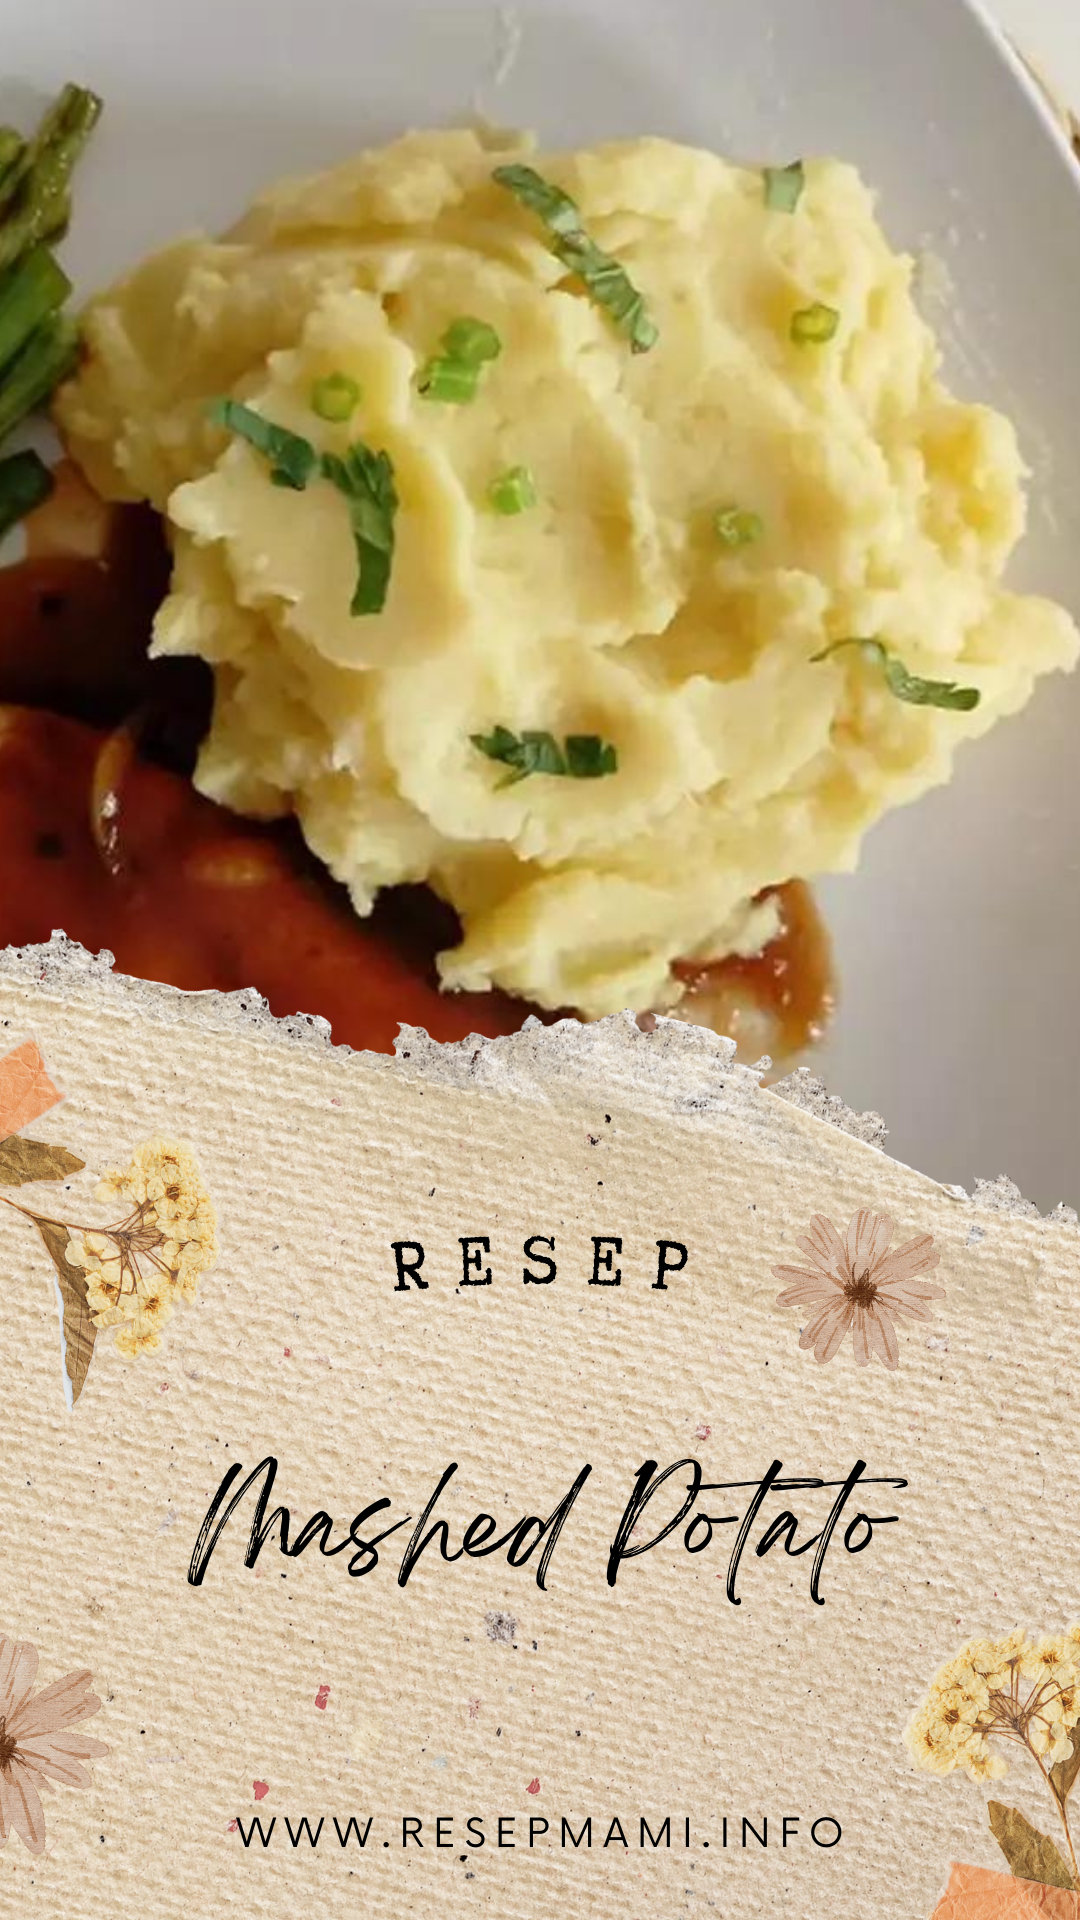 Resep mashed potato